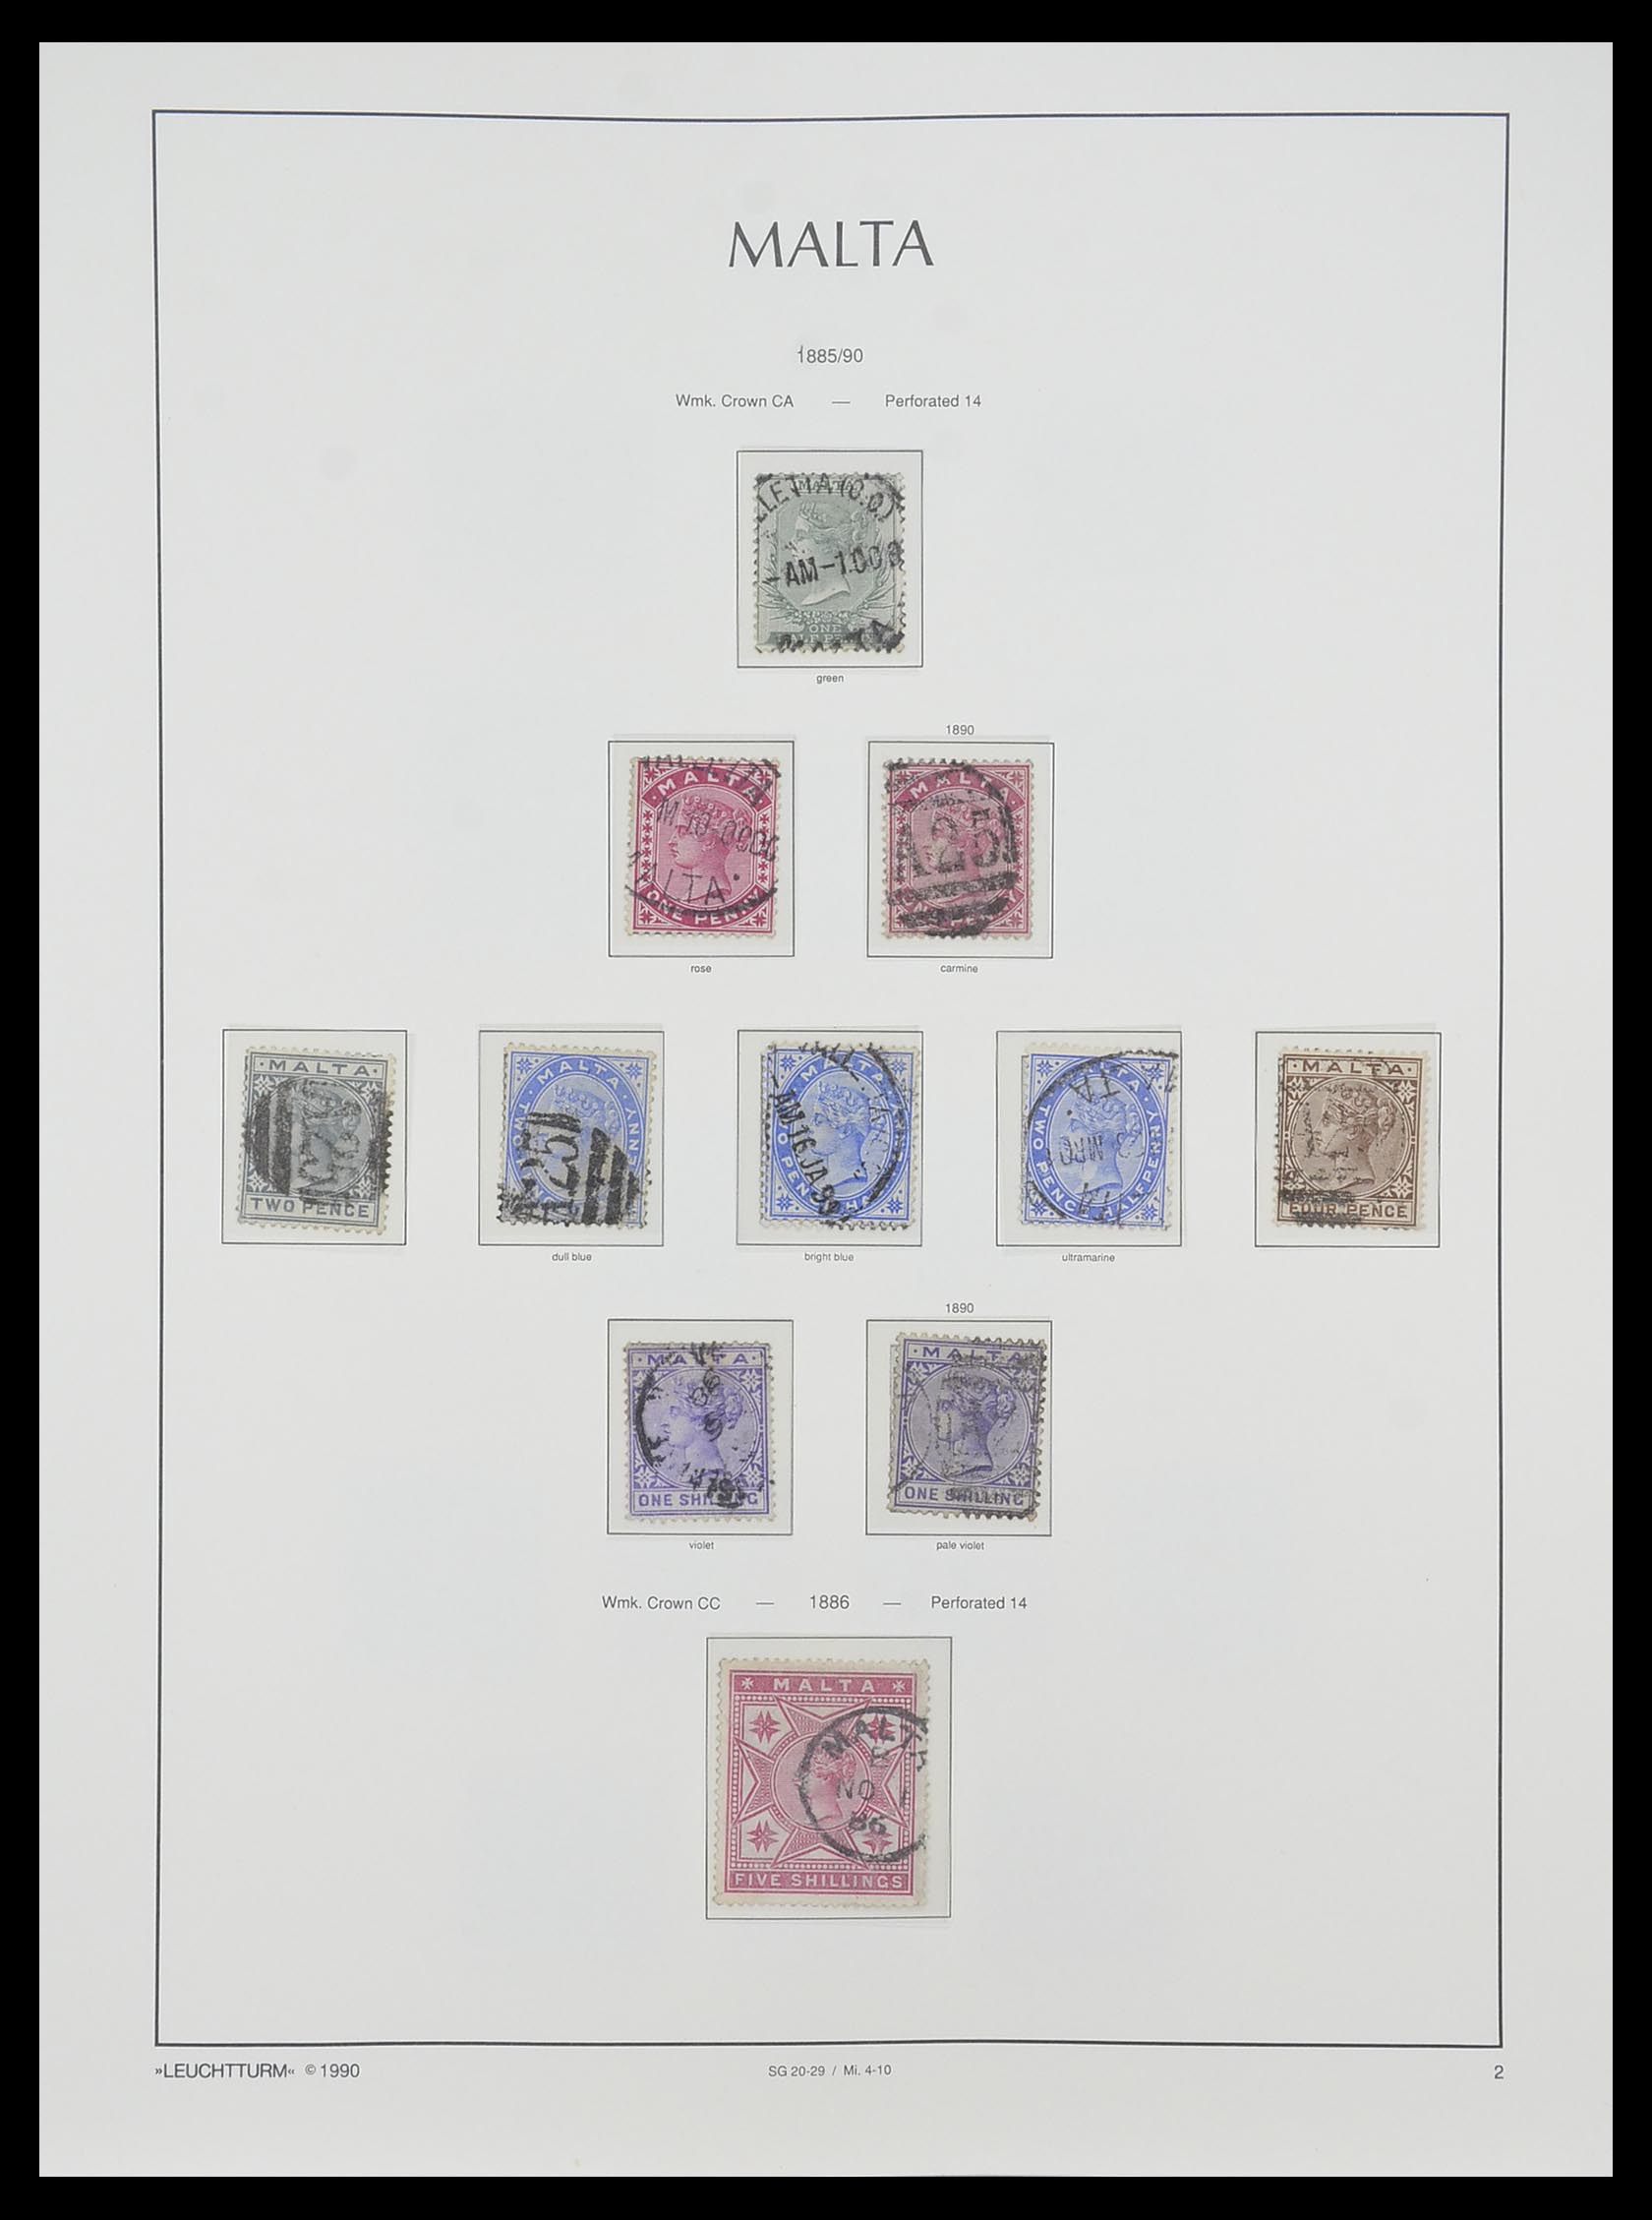 33968 002 - Stamp collection 33968 Malta 1861-2001.